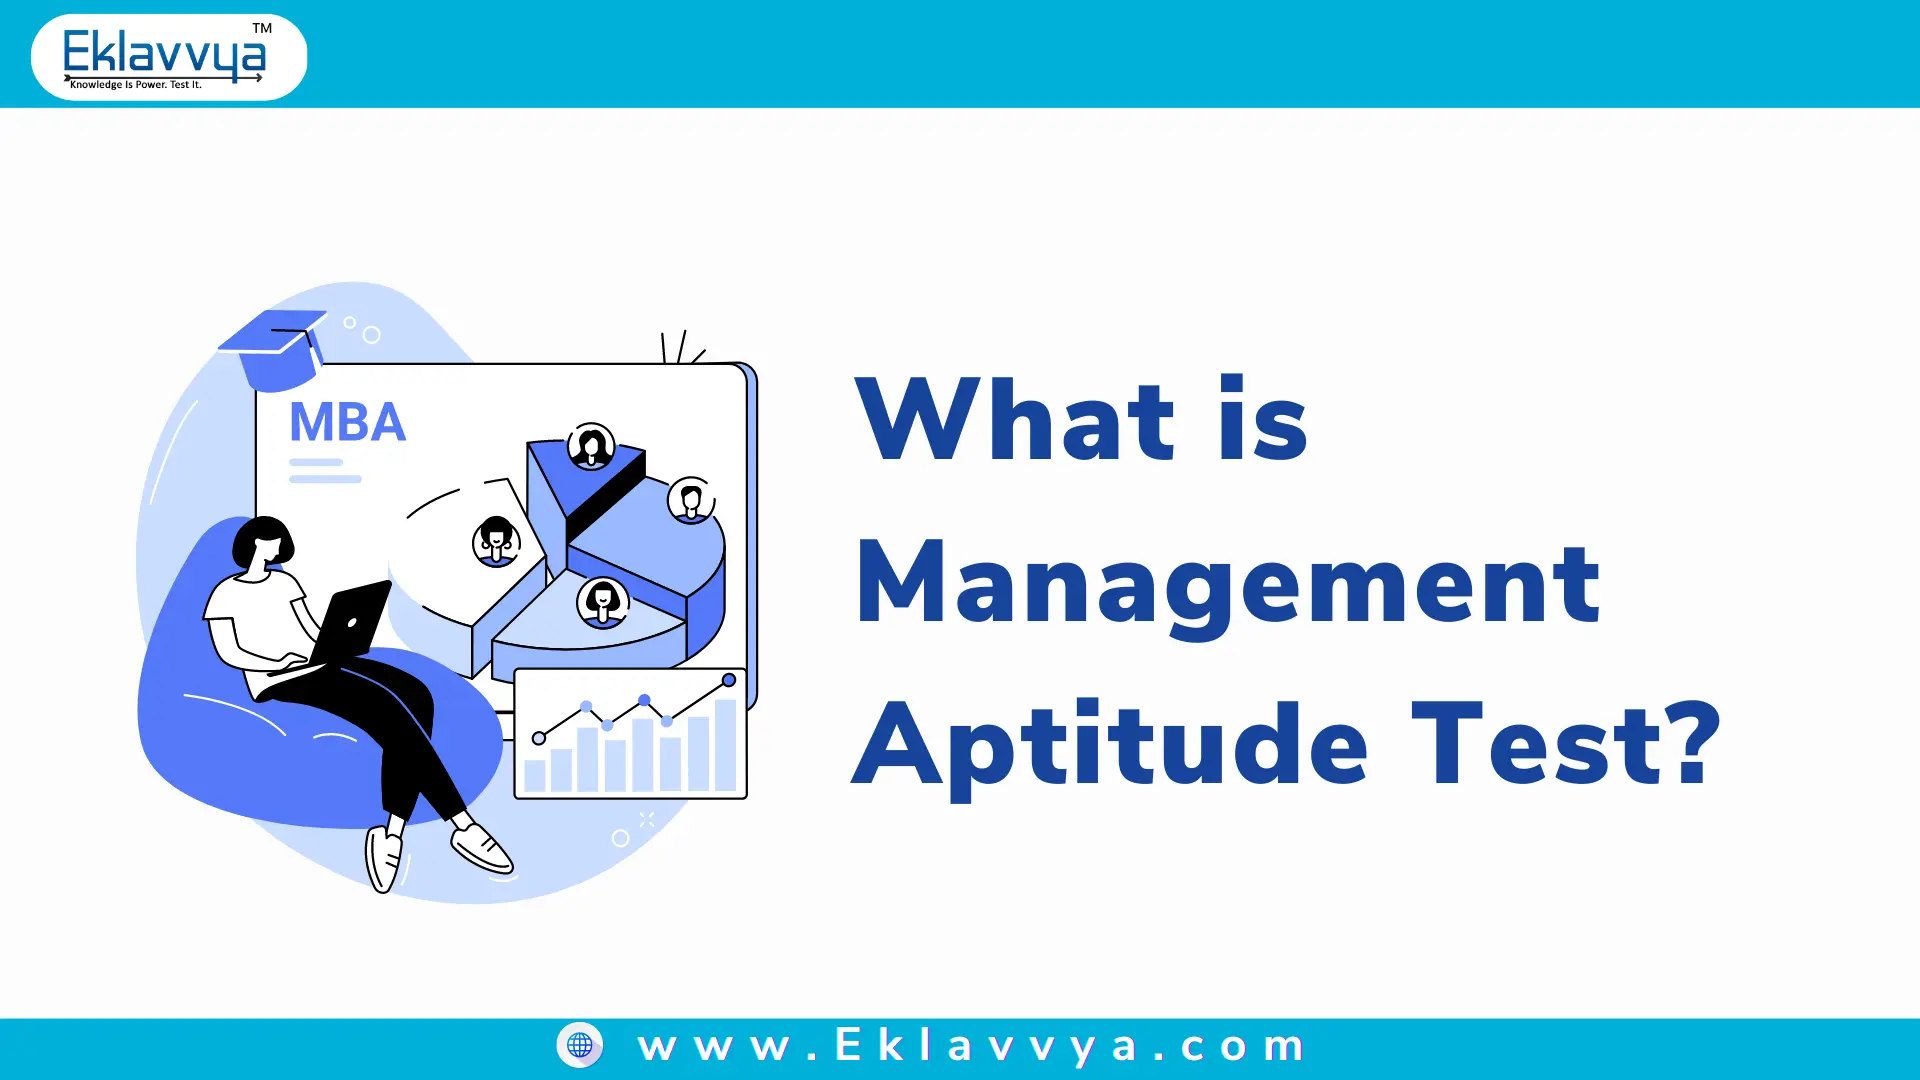 Management Aptitude Test?